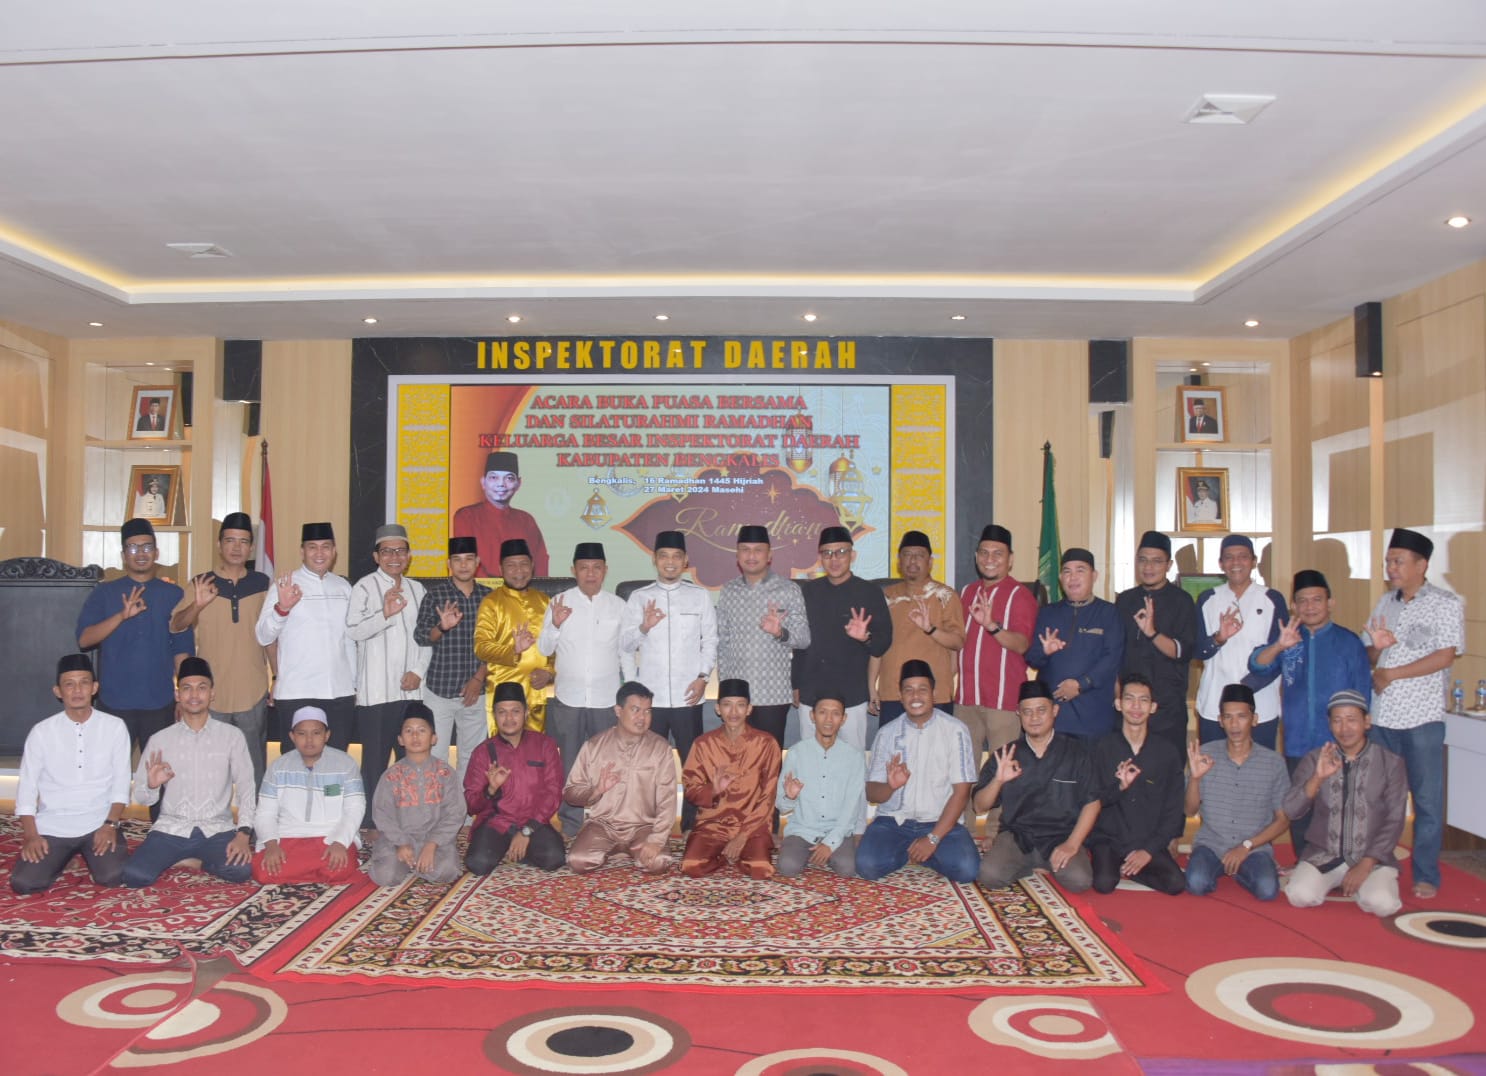 Inspektorat Daerah Kabupaten Bengkalis Gelar Kegiatan Buka Puasa Bersama dan Silaturahmi Ramadhan